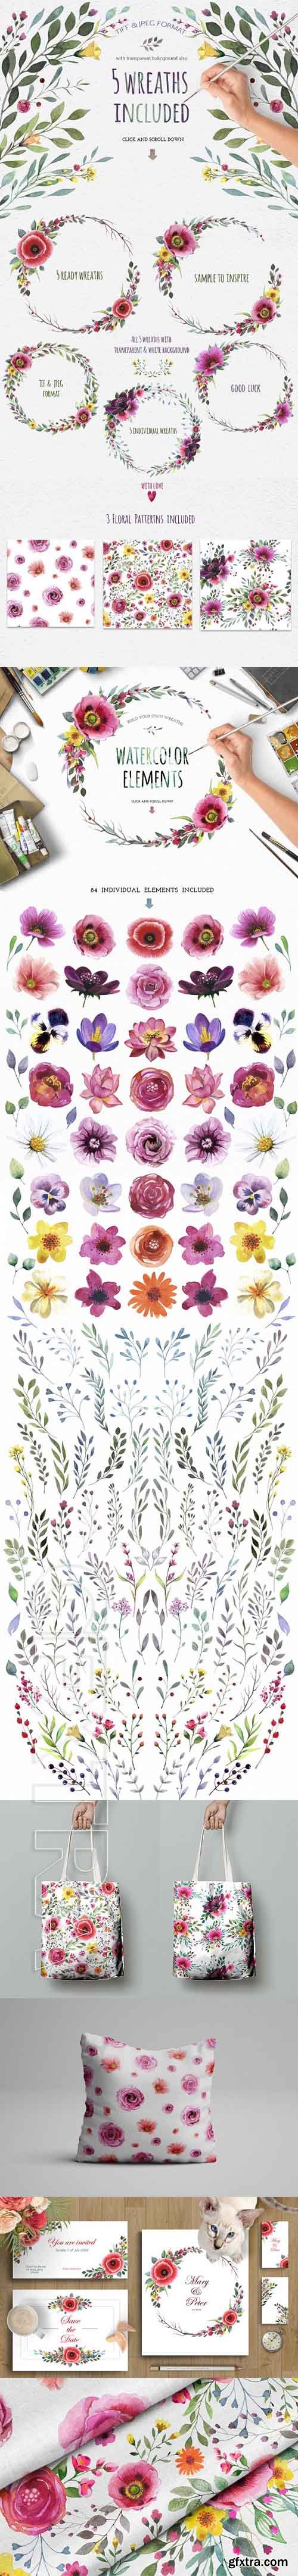 CreativeMarket - Watercolour flower Create wreath 1720142